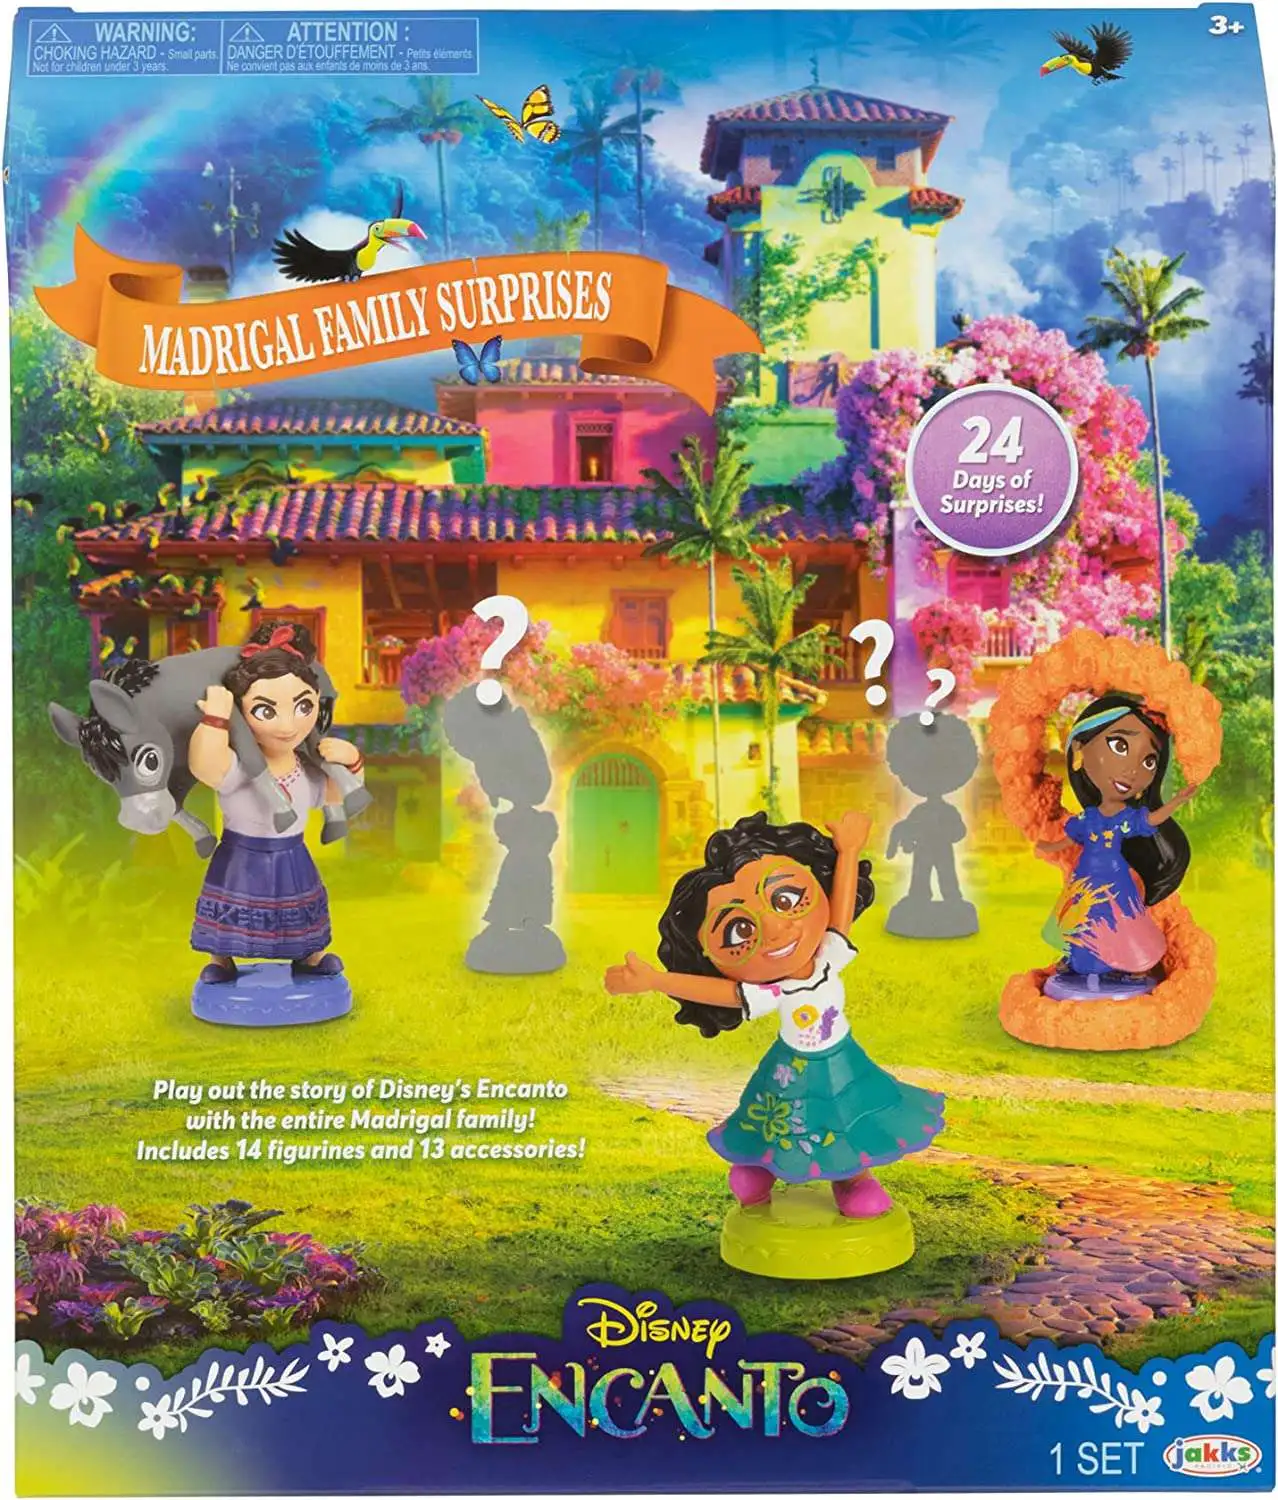 Disney Encanto Dolores Madrigal Doll Jakks Pacific - ToyWiz